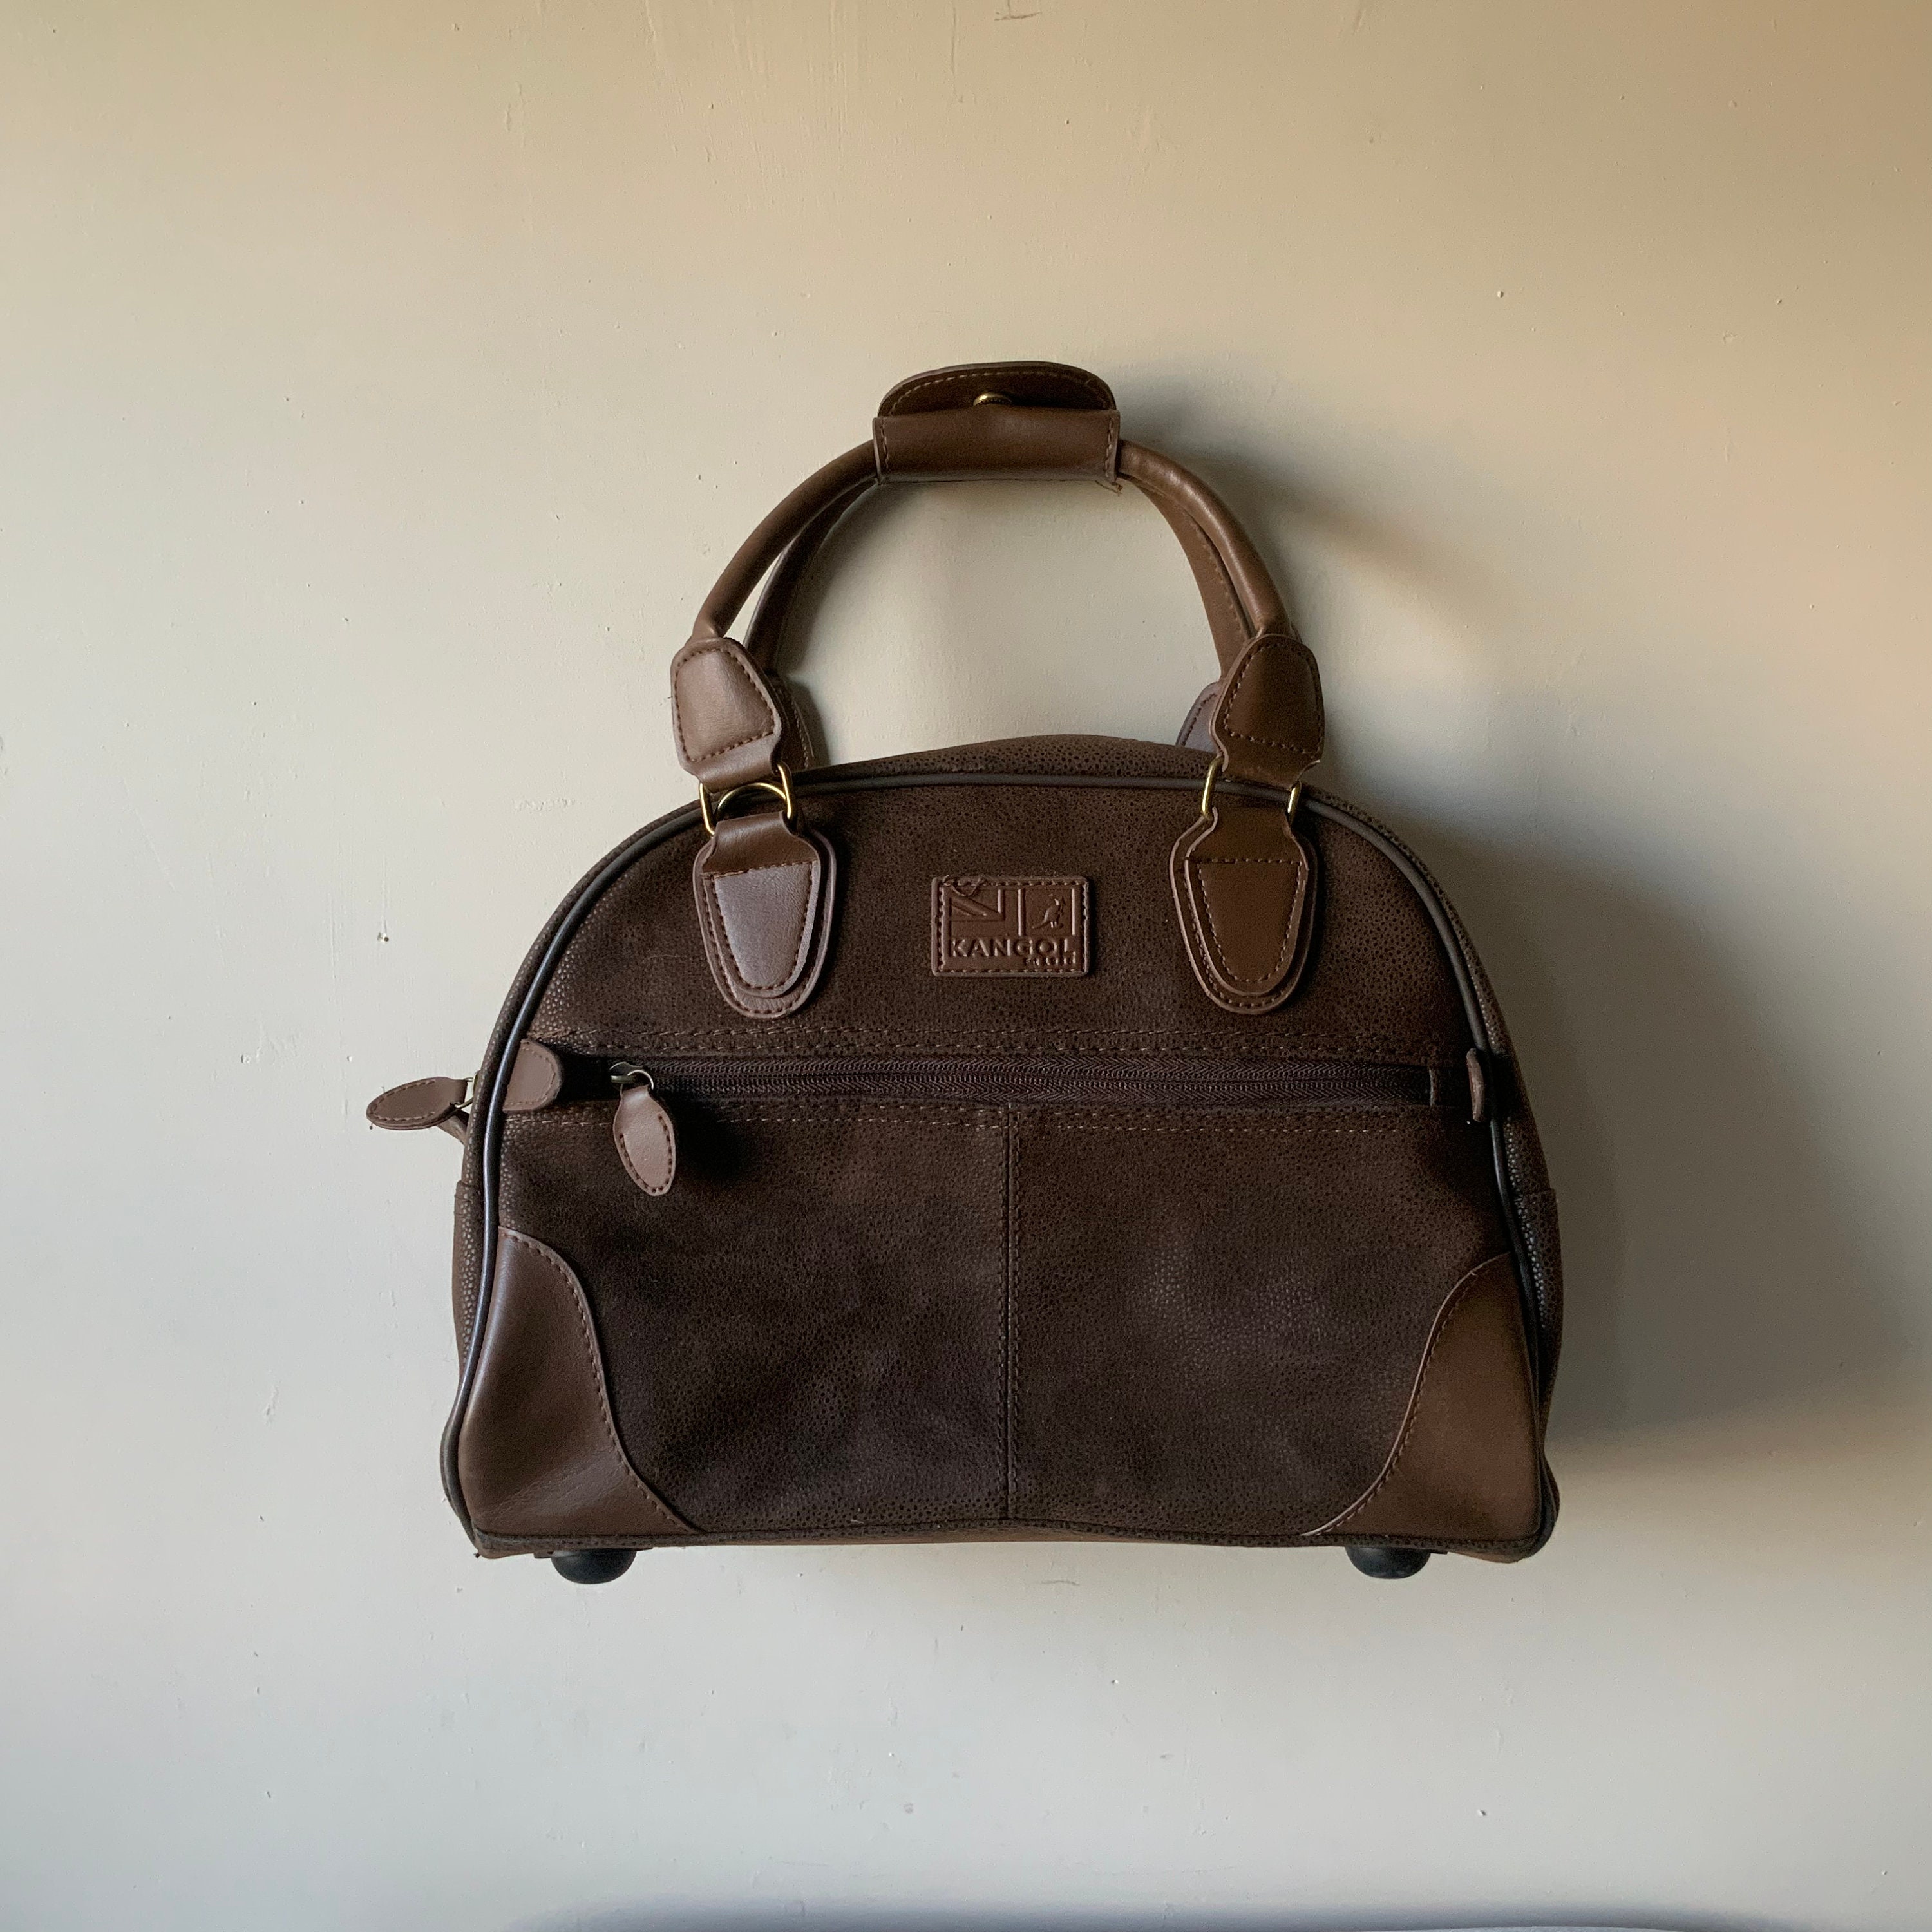 Kangol Bags | Mercari